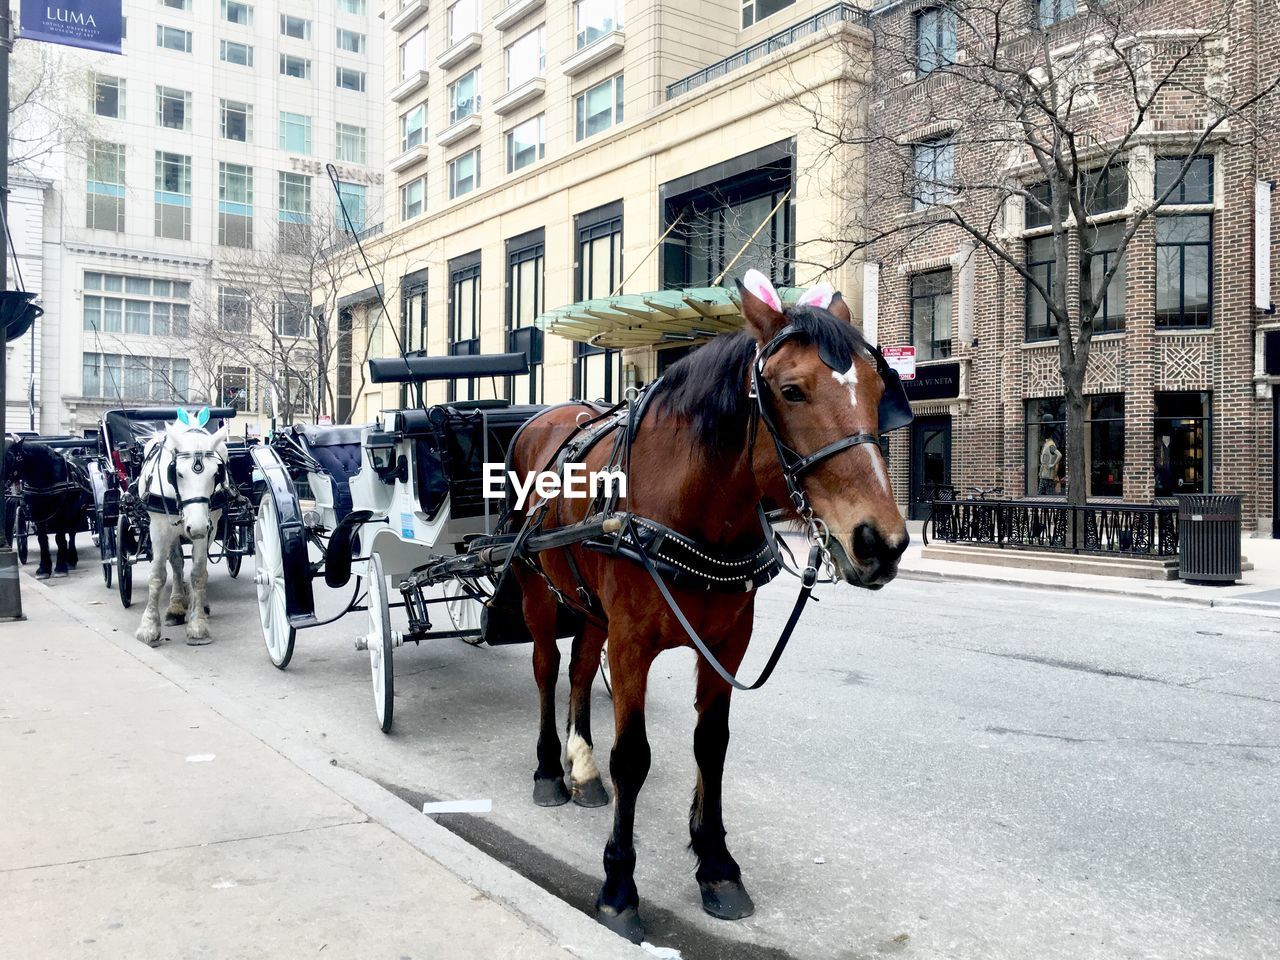 Horse carts on street